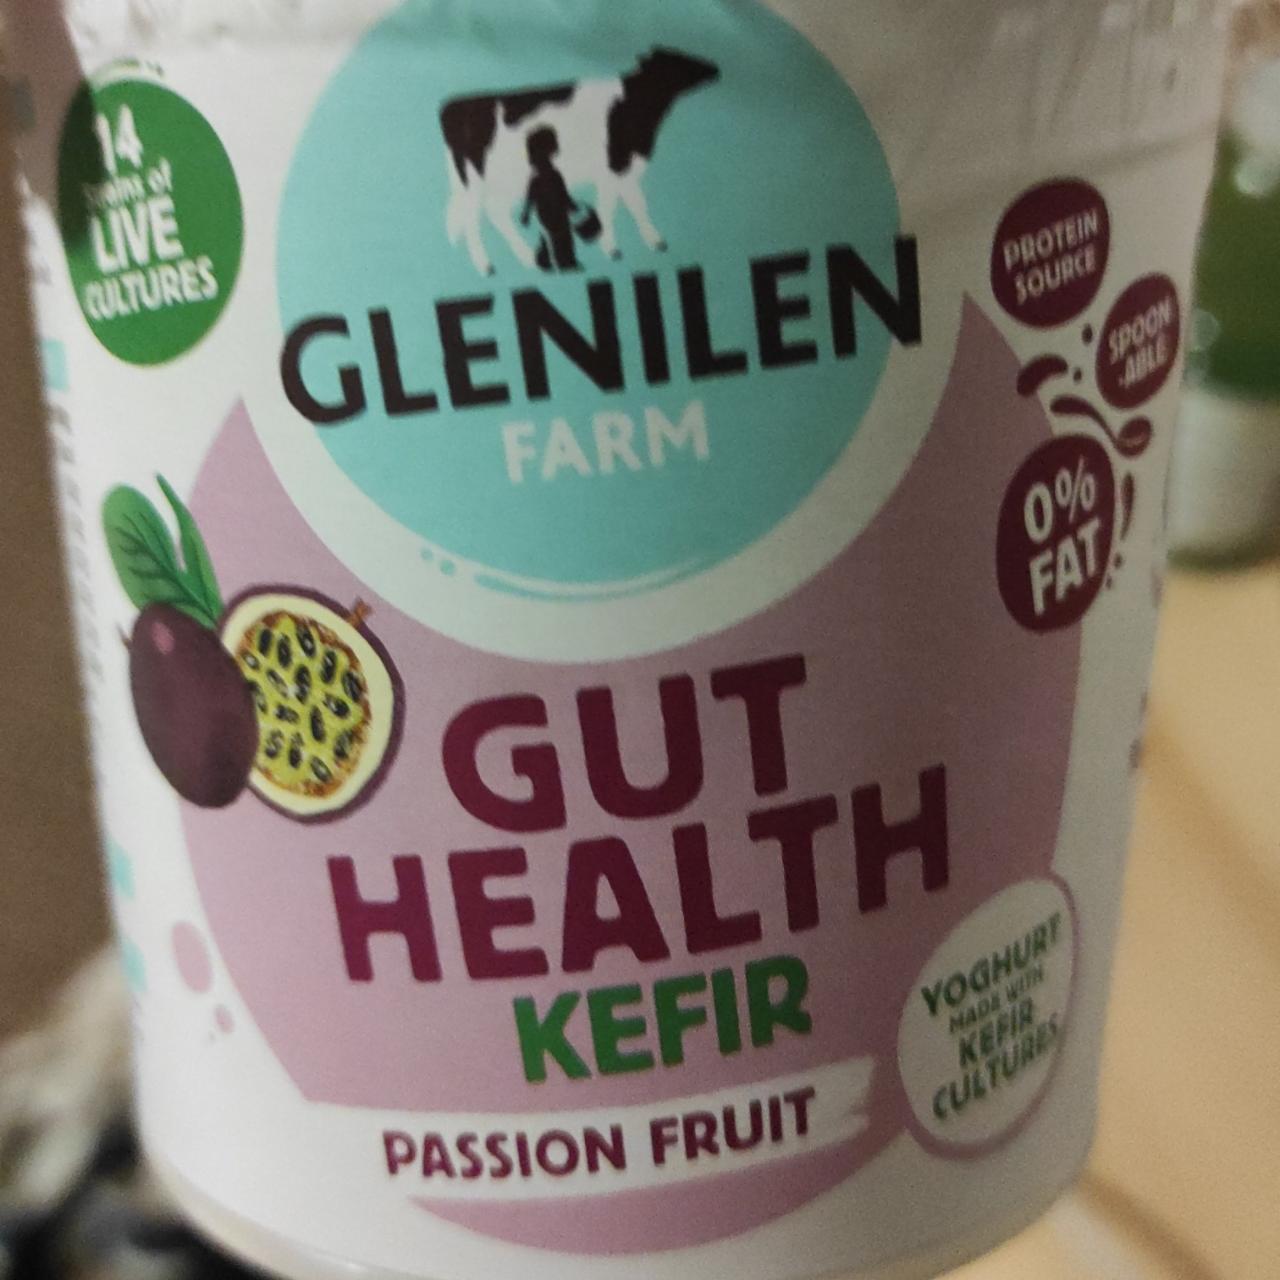 Fotografie - Gut Health Kefir Passion Fruit Glenilen Farm